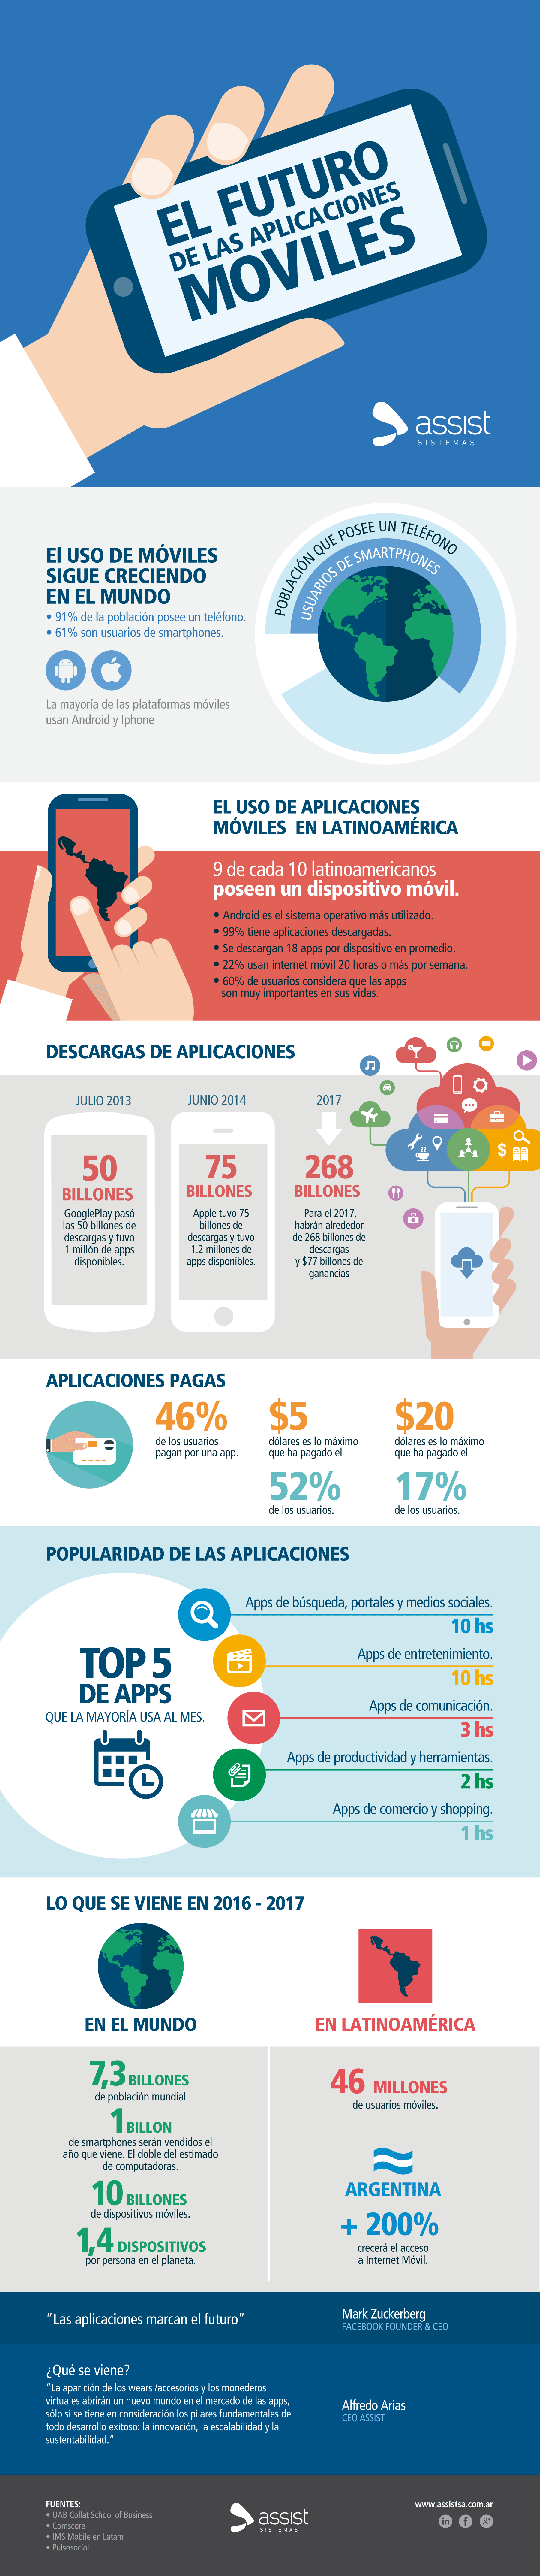 infografia_app_moviles